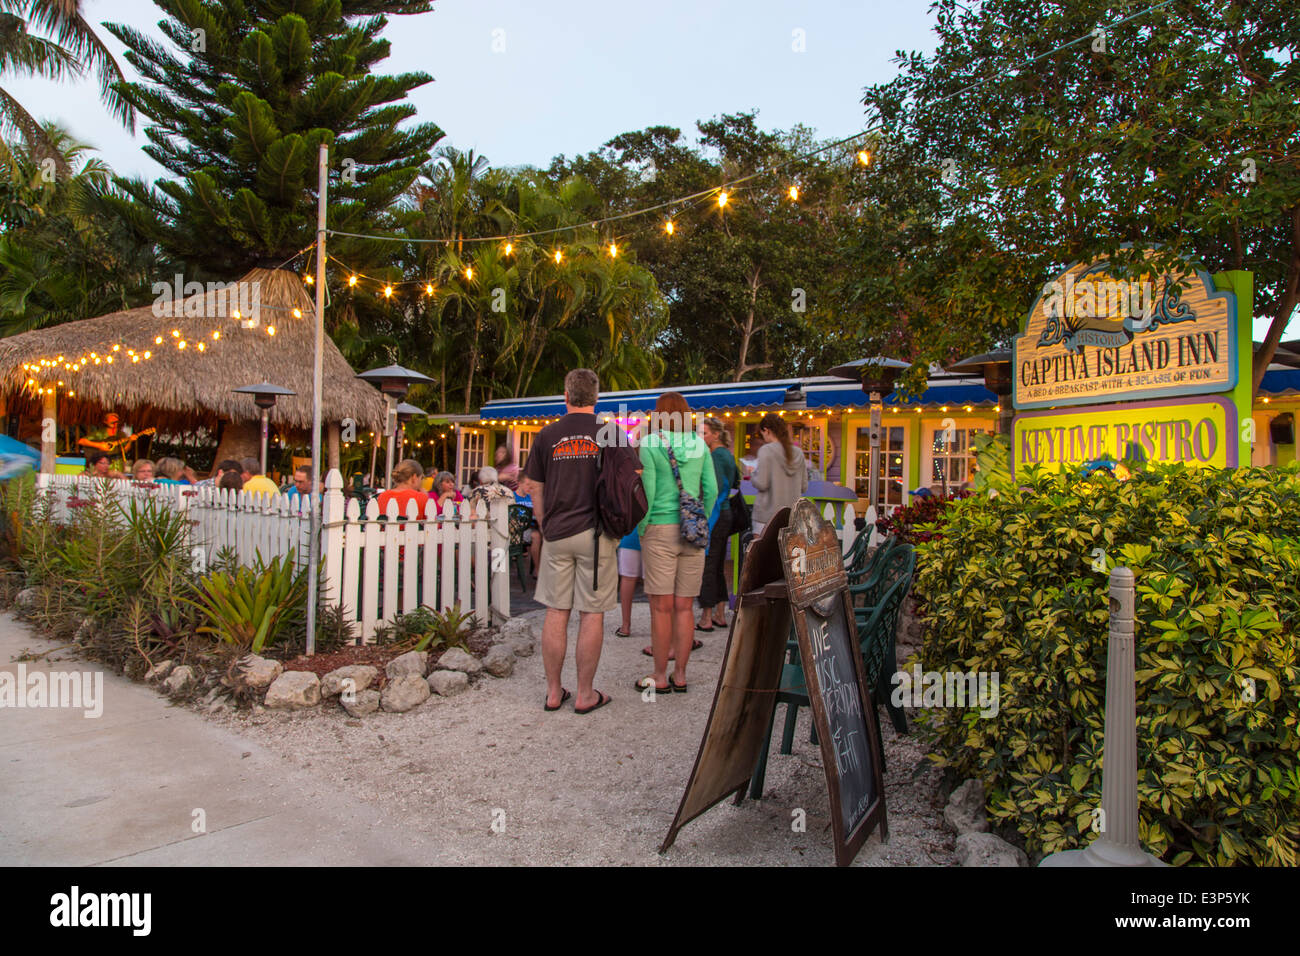 The Key Lime Bistro in Captiva Island, Florida, USA Stock Photo